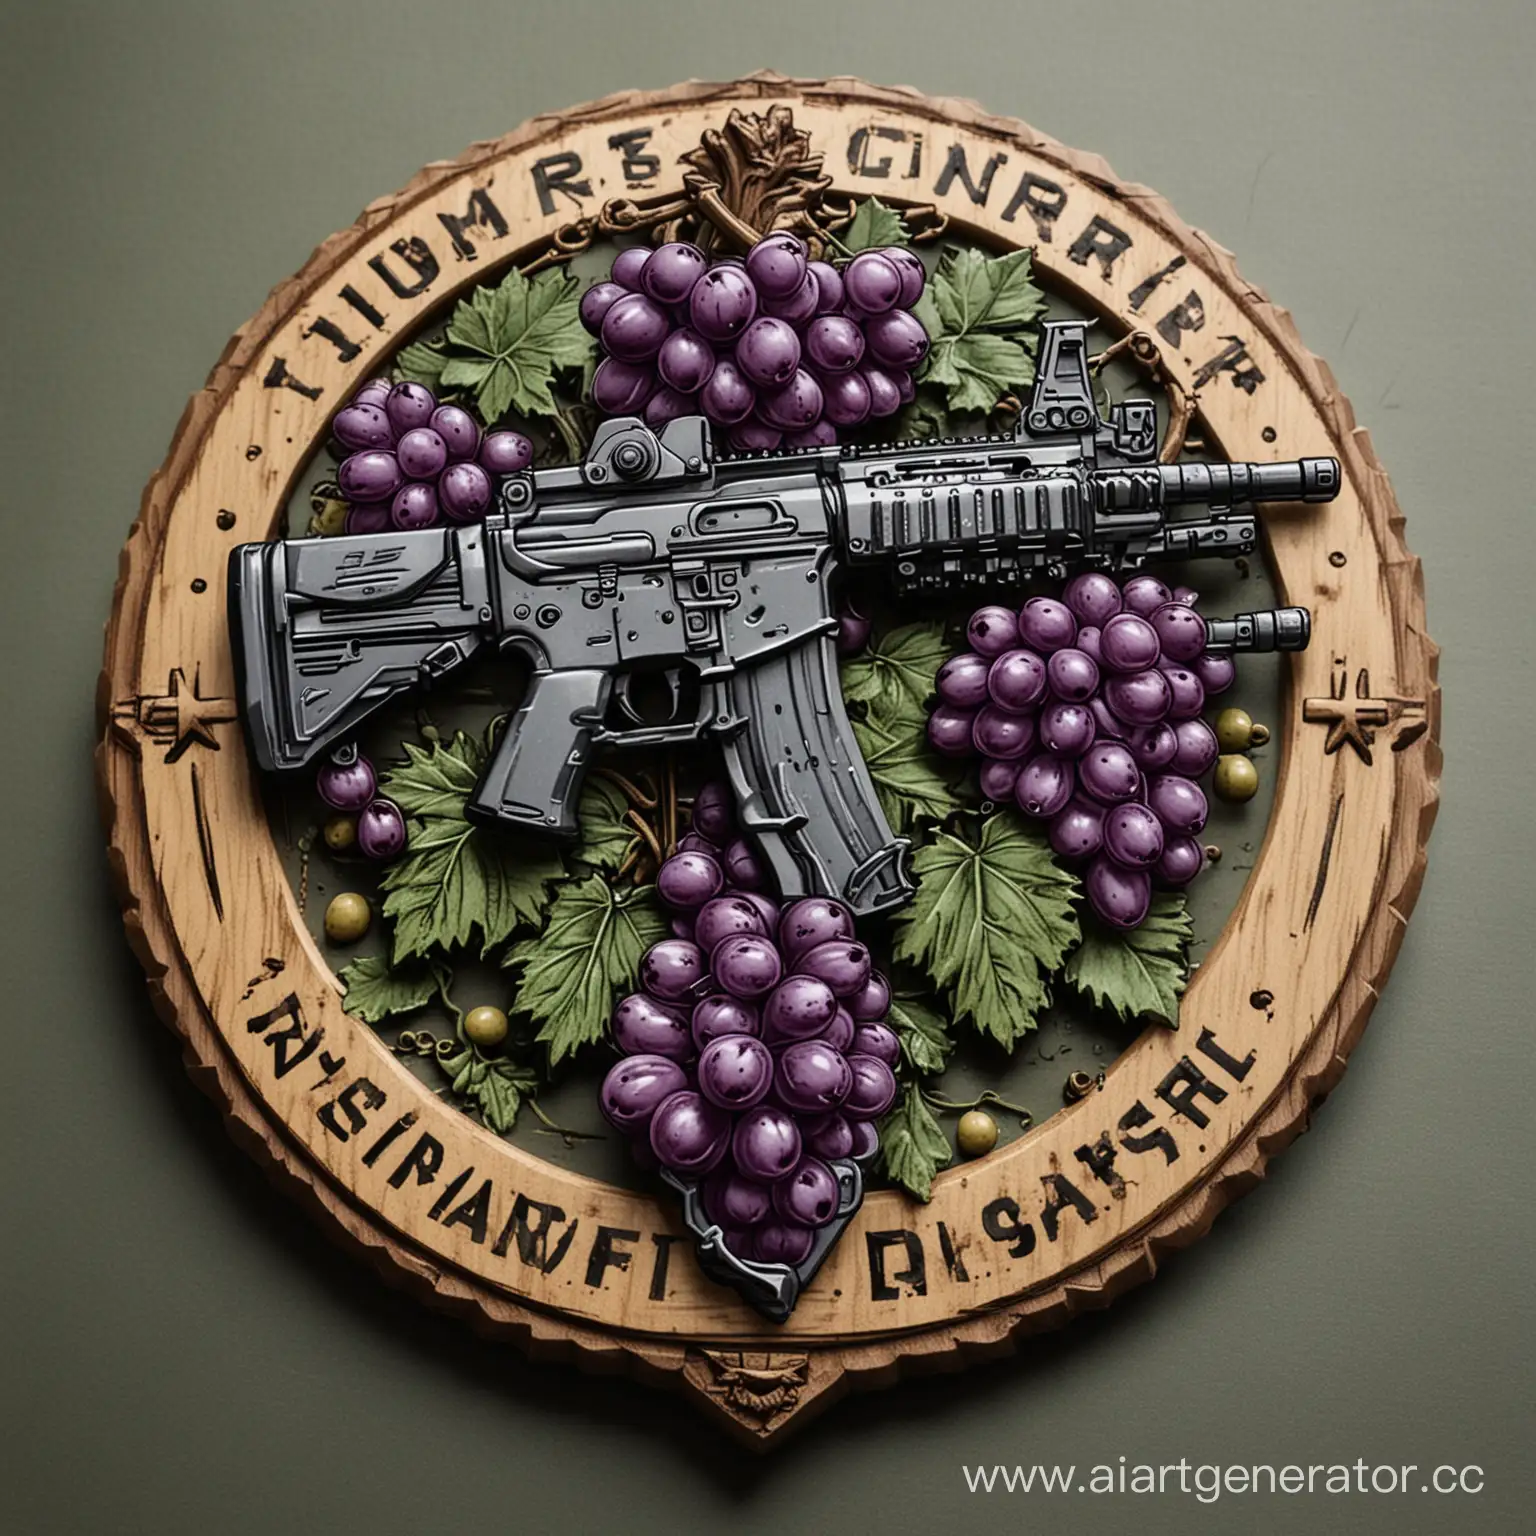 Vineyard-Airsoft-Team-Emblem-Modern-Tactical-Gear-and-Grape-Clusters